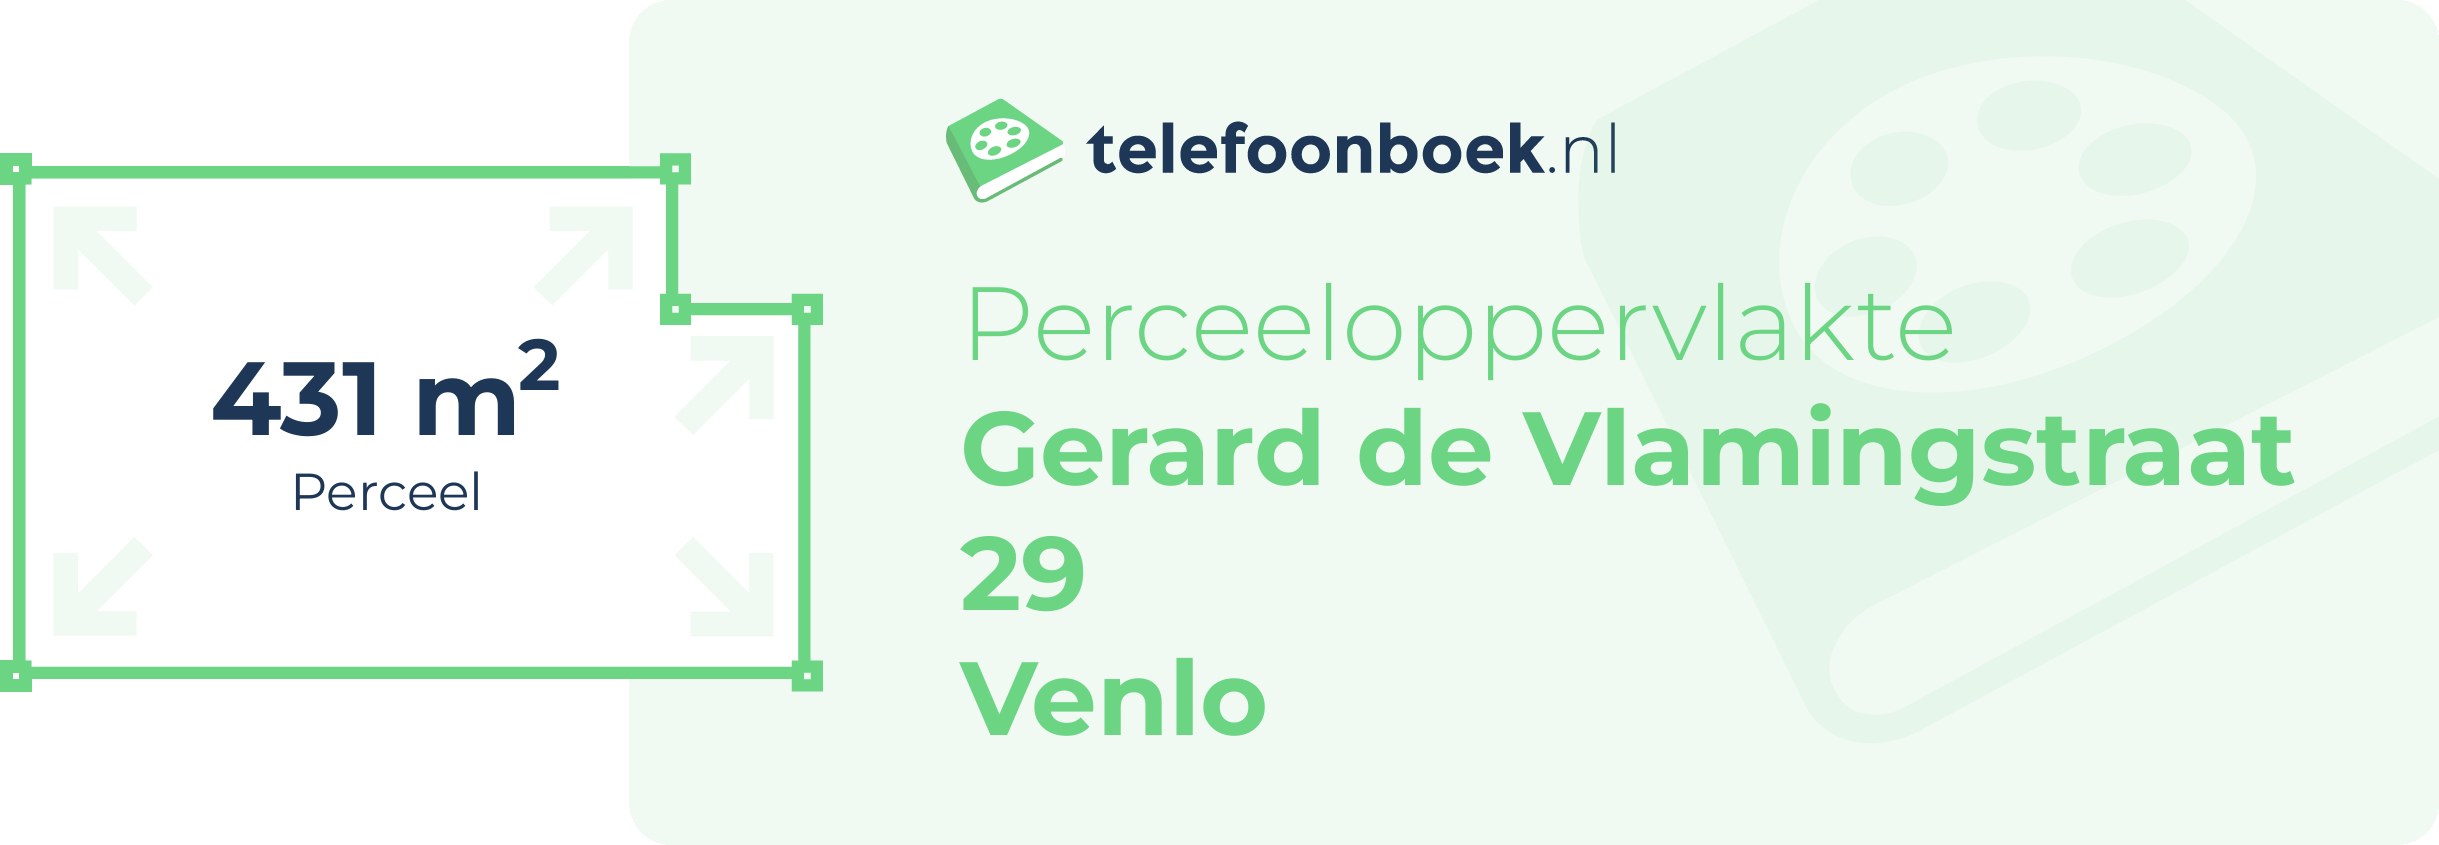 Perceeloppervlakte Gerard De Vlamingstraat 29 Venlo